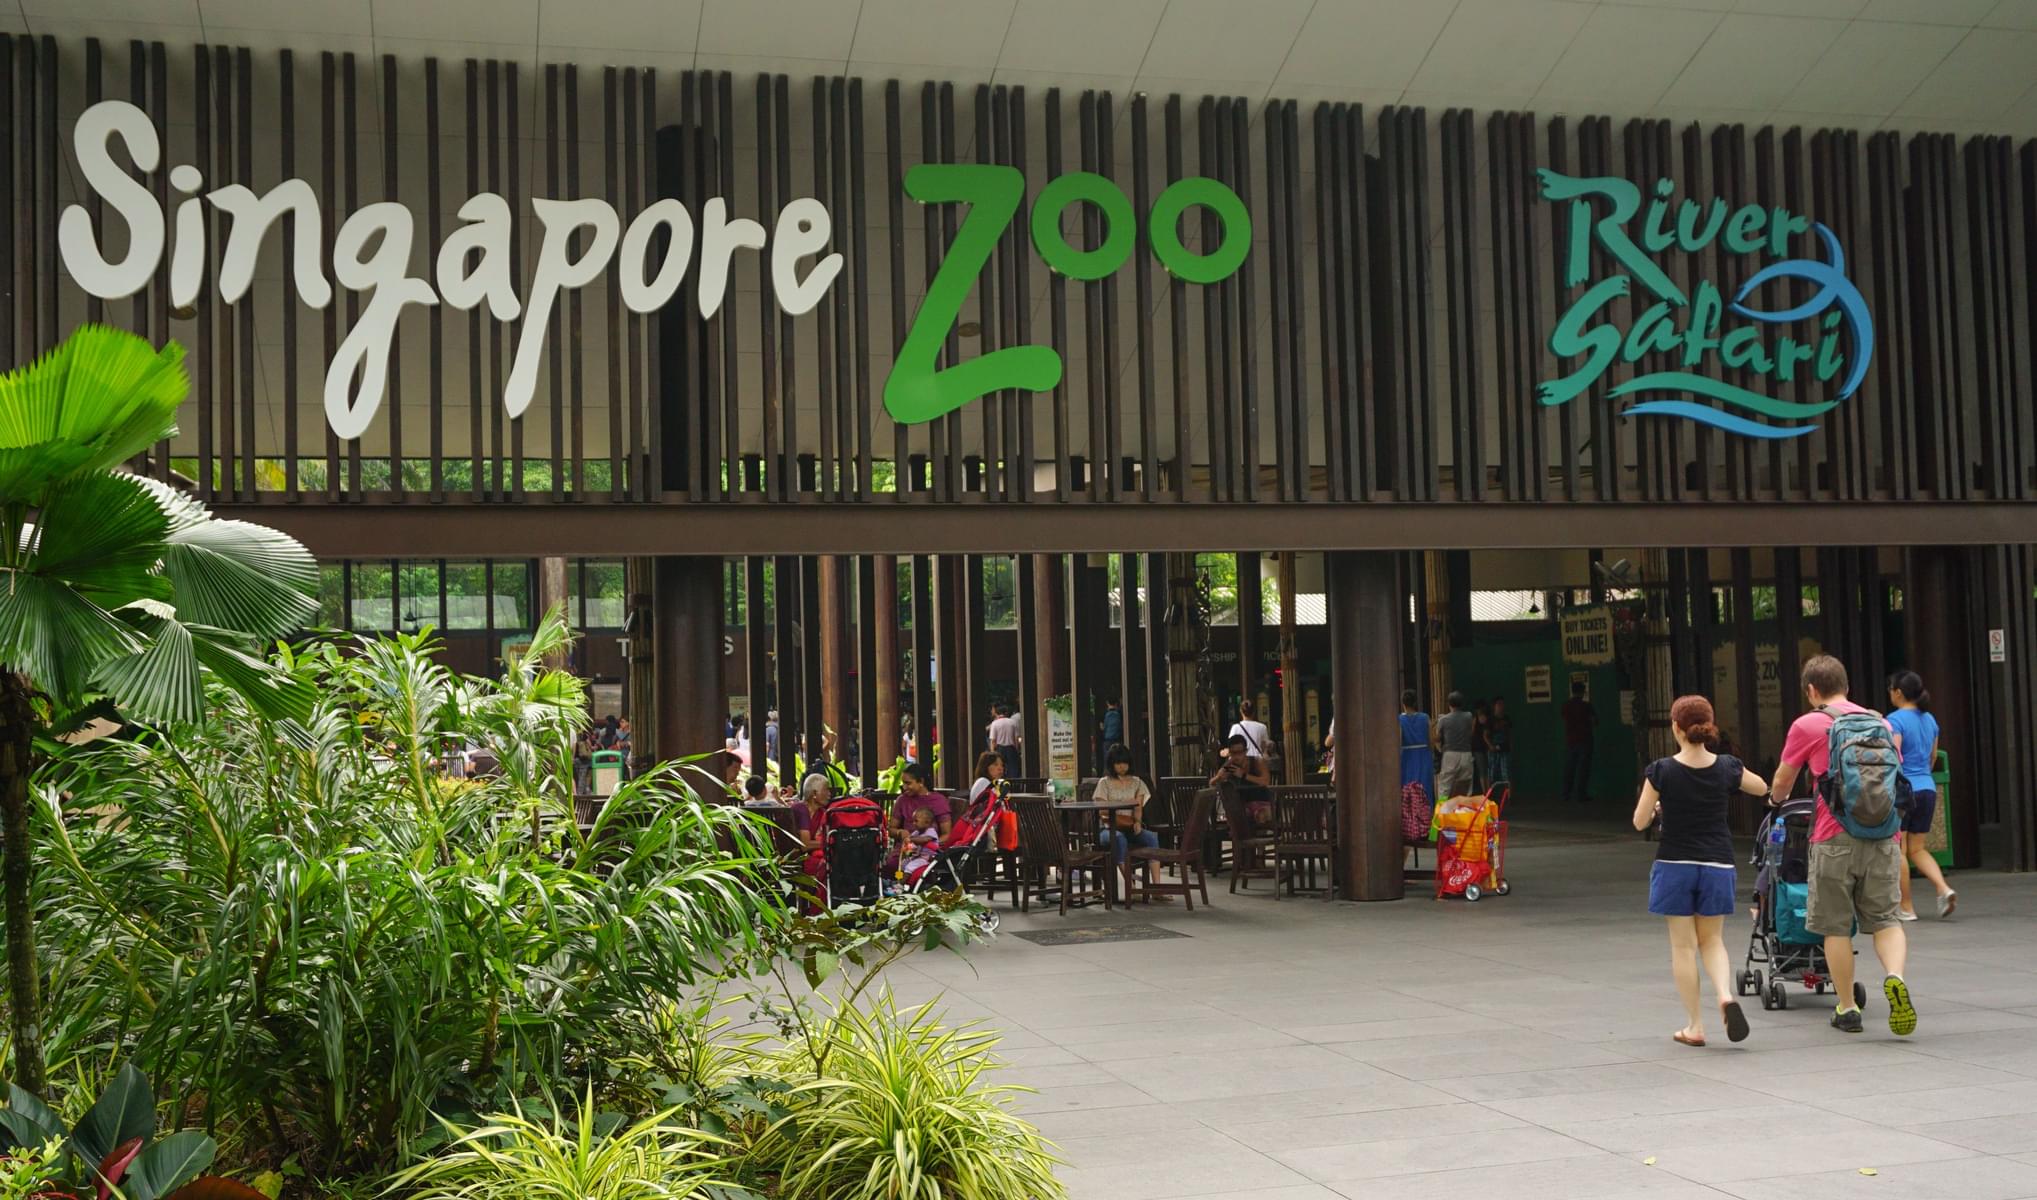 How to Reach Singapore Zoo